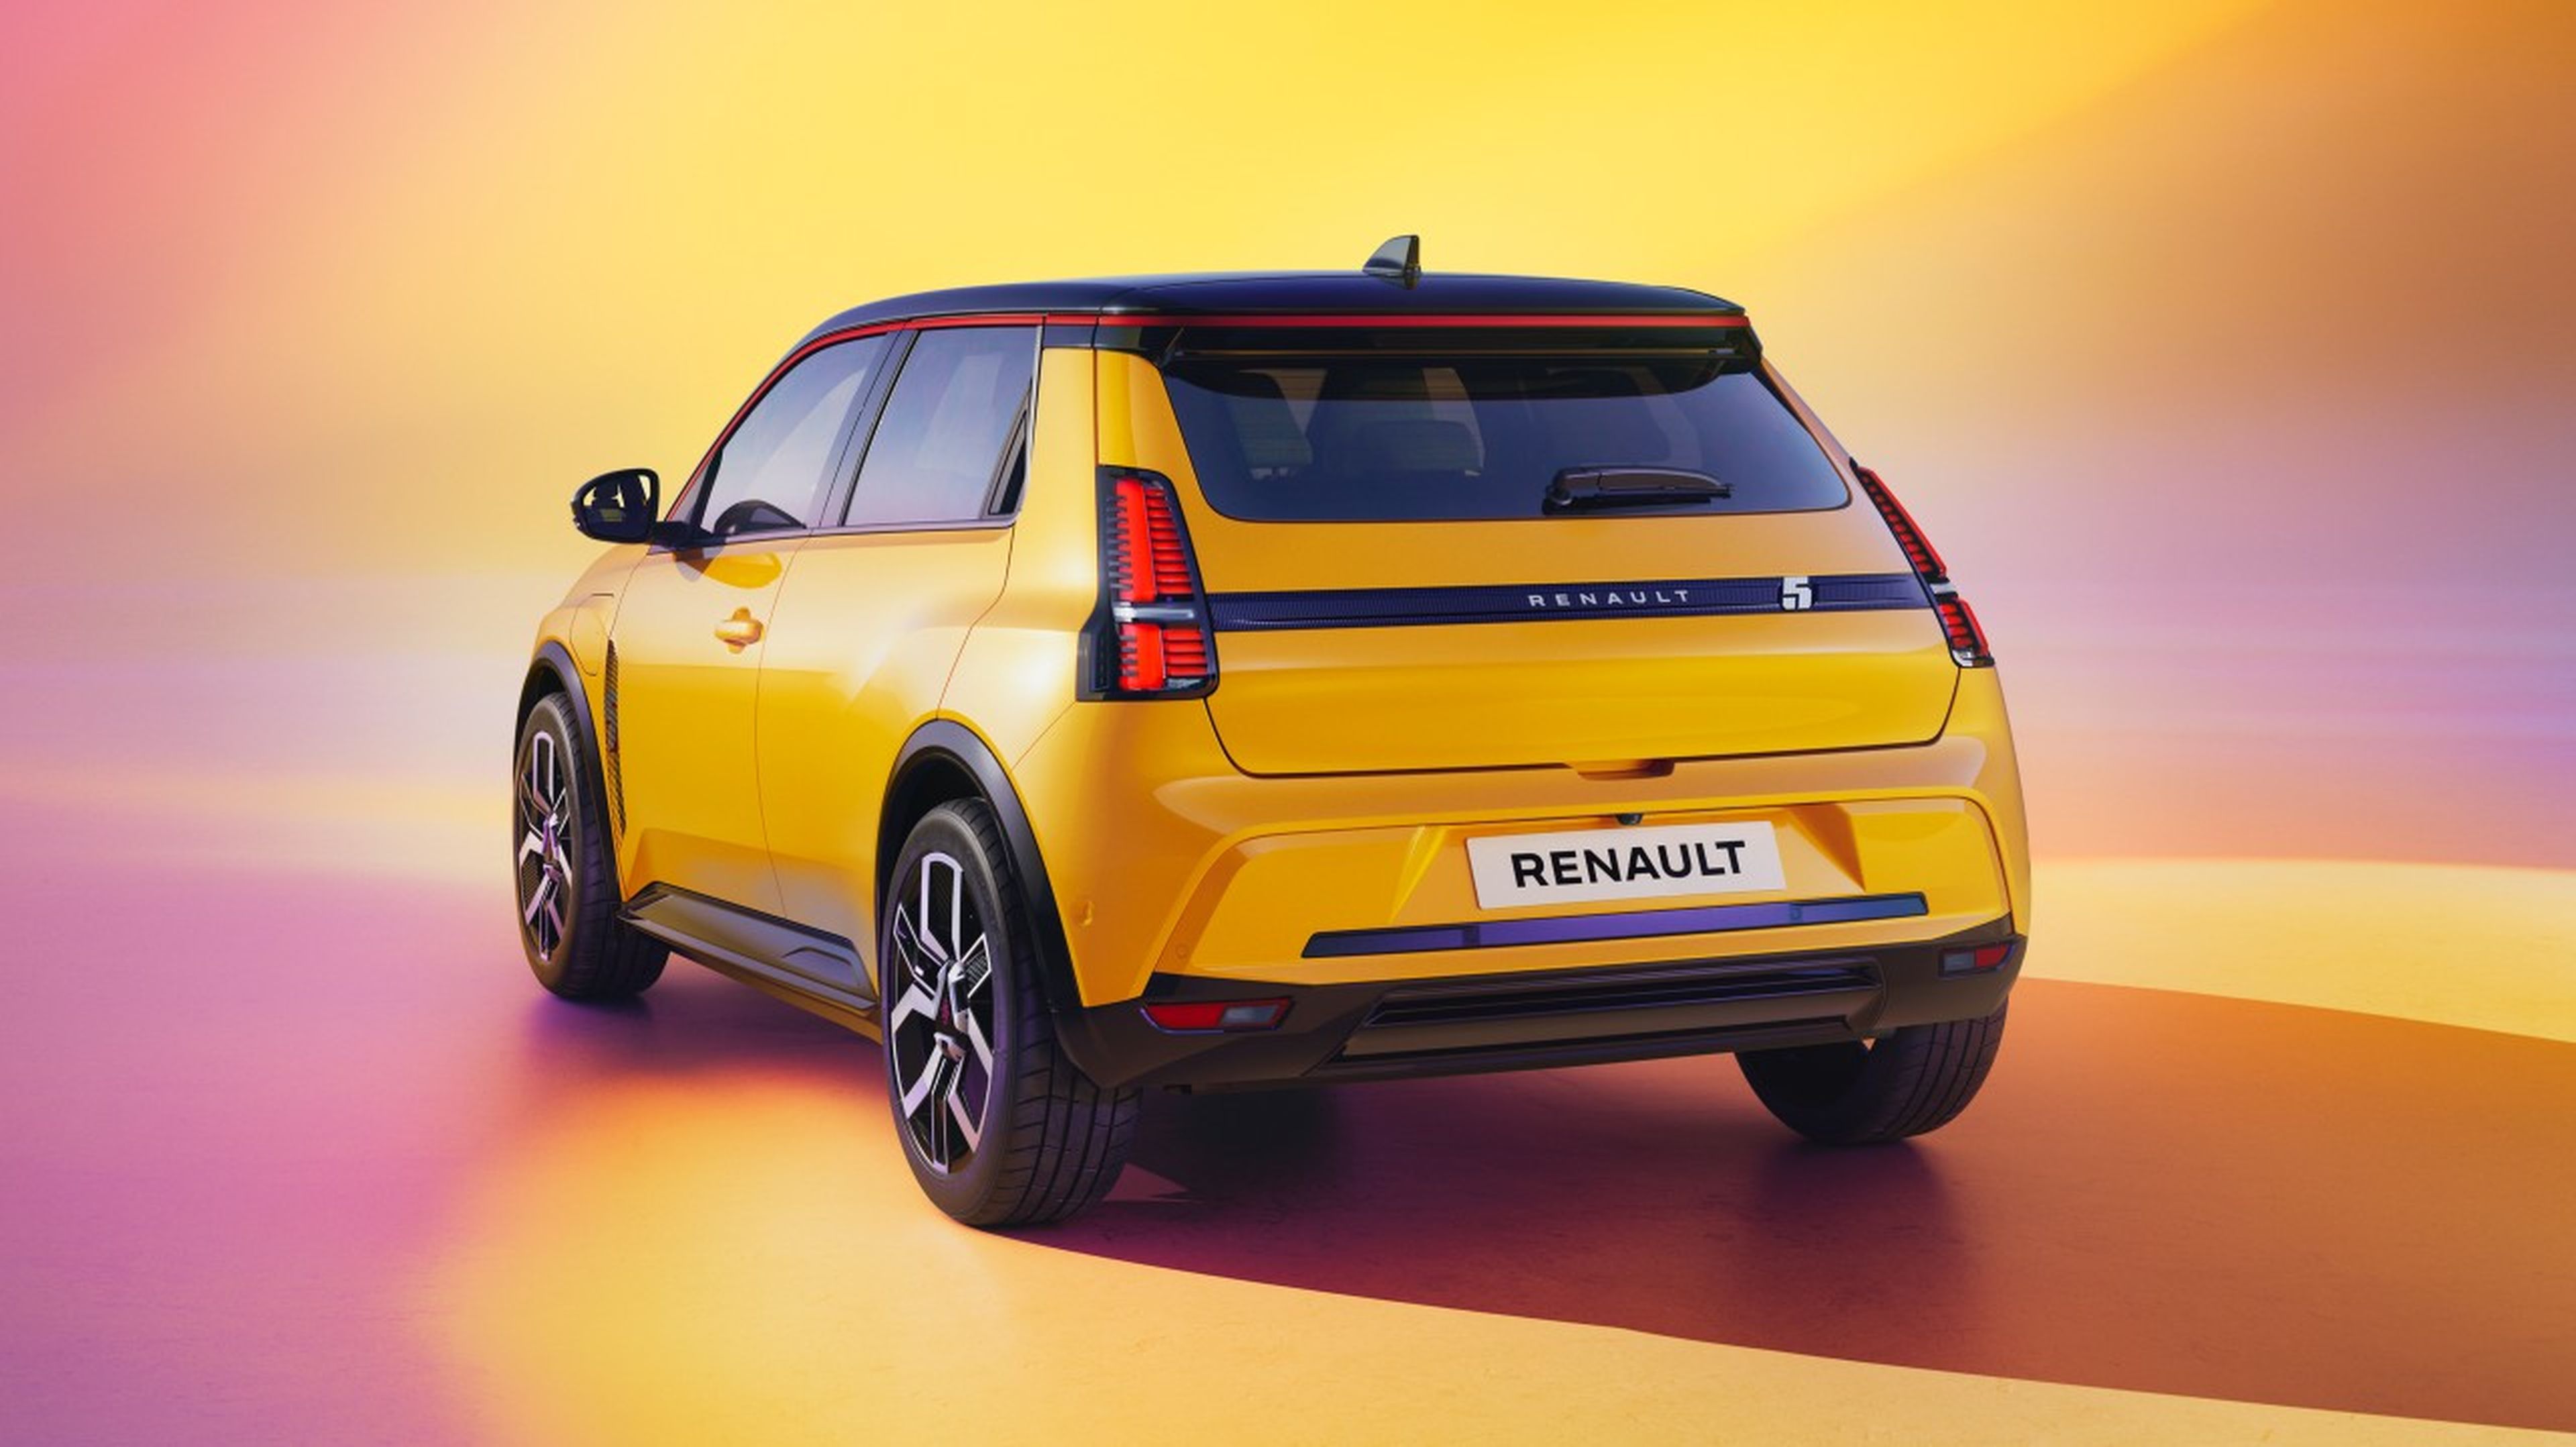 Renault 5 